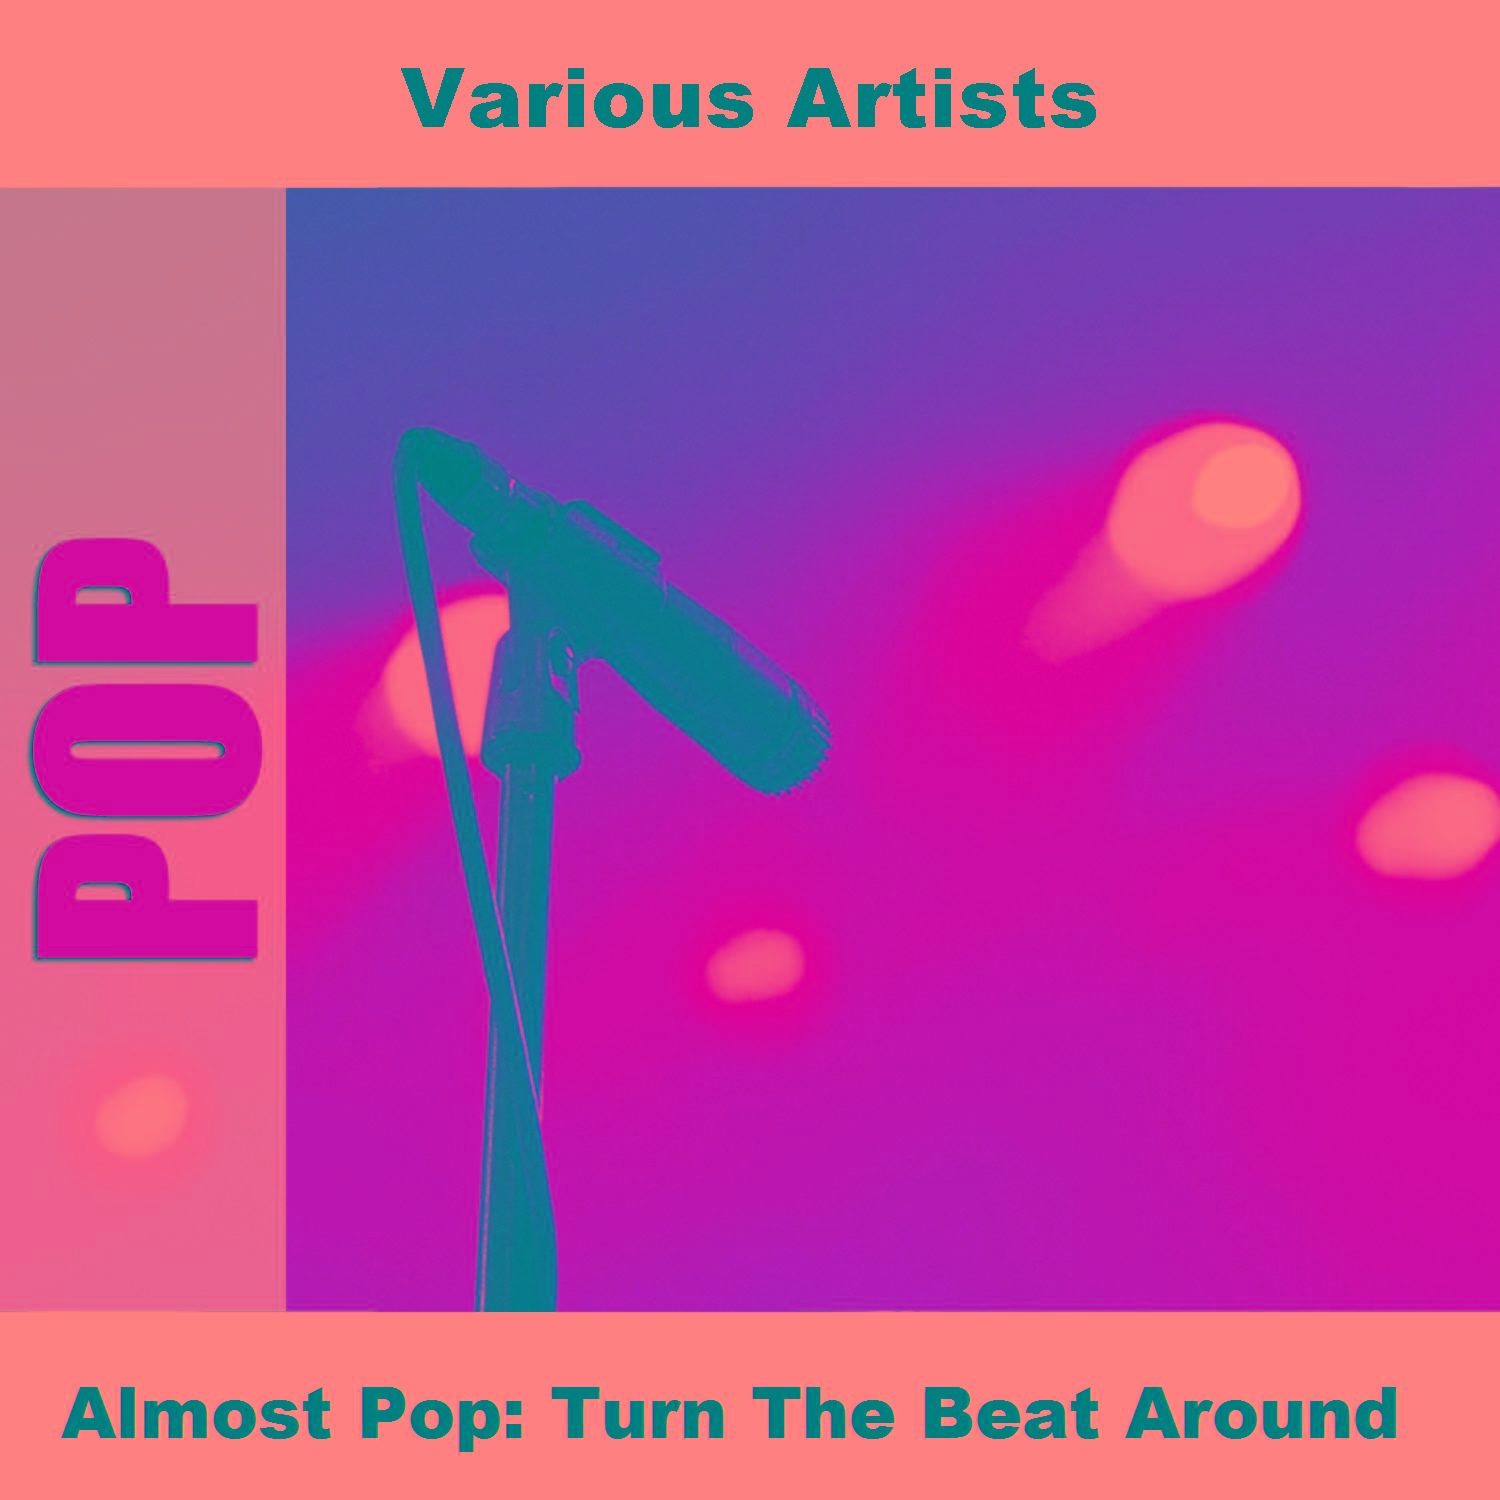 Almost Pop: Turn The Beat Around